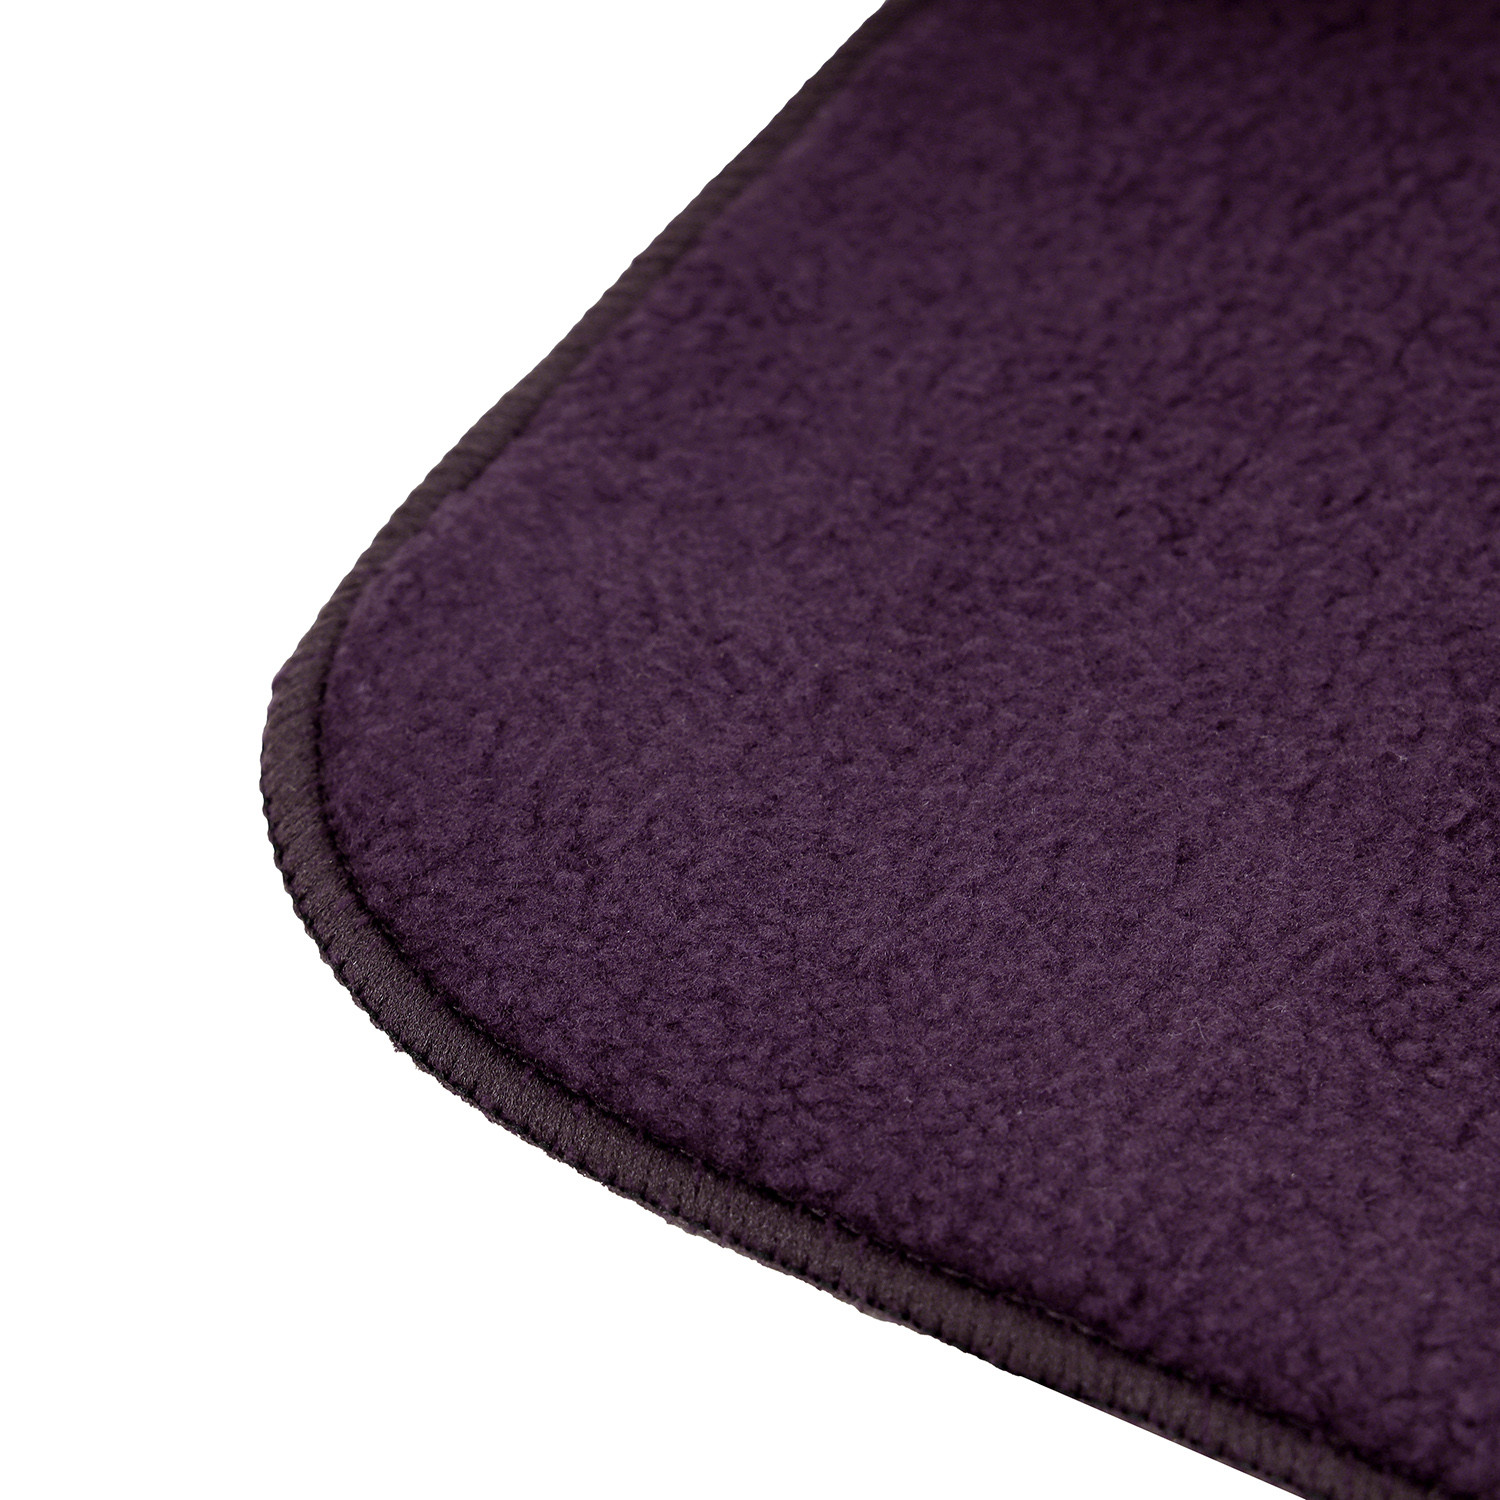 Kuber Industries Dish Dry Mat | Microfiber Drying Mat | Reversible Kitchen Drying Mat | Absorbent Mat | Kitchen Dish Dry Mat | 38x50 | Pack of 2 | Blue & Dark Purple